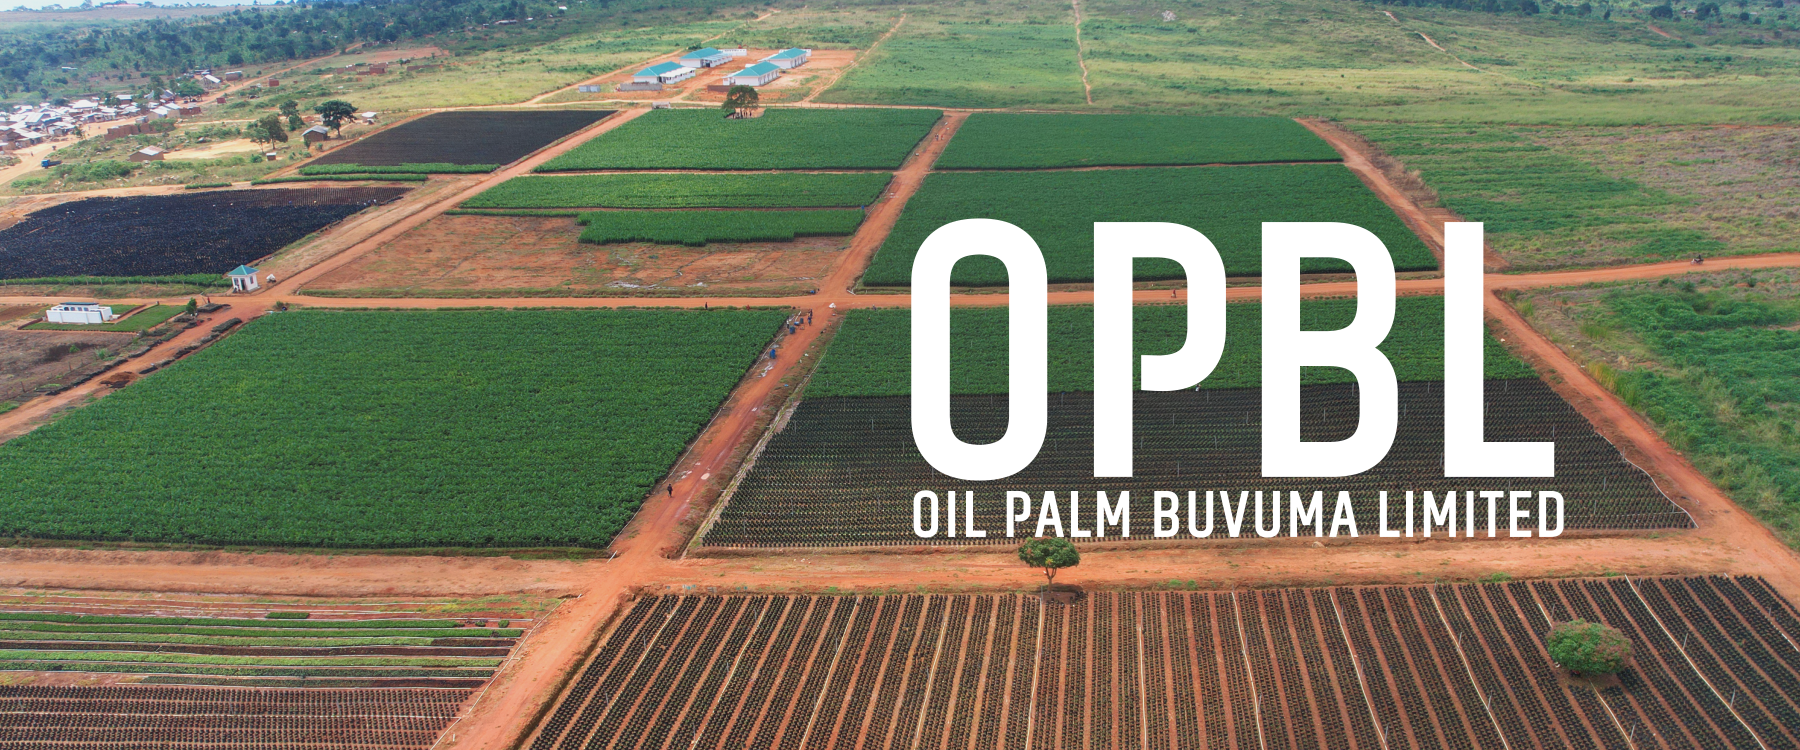 Oil Palm Buvuma Limited